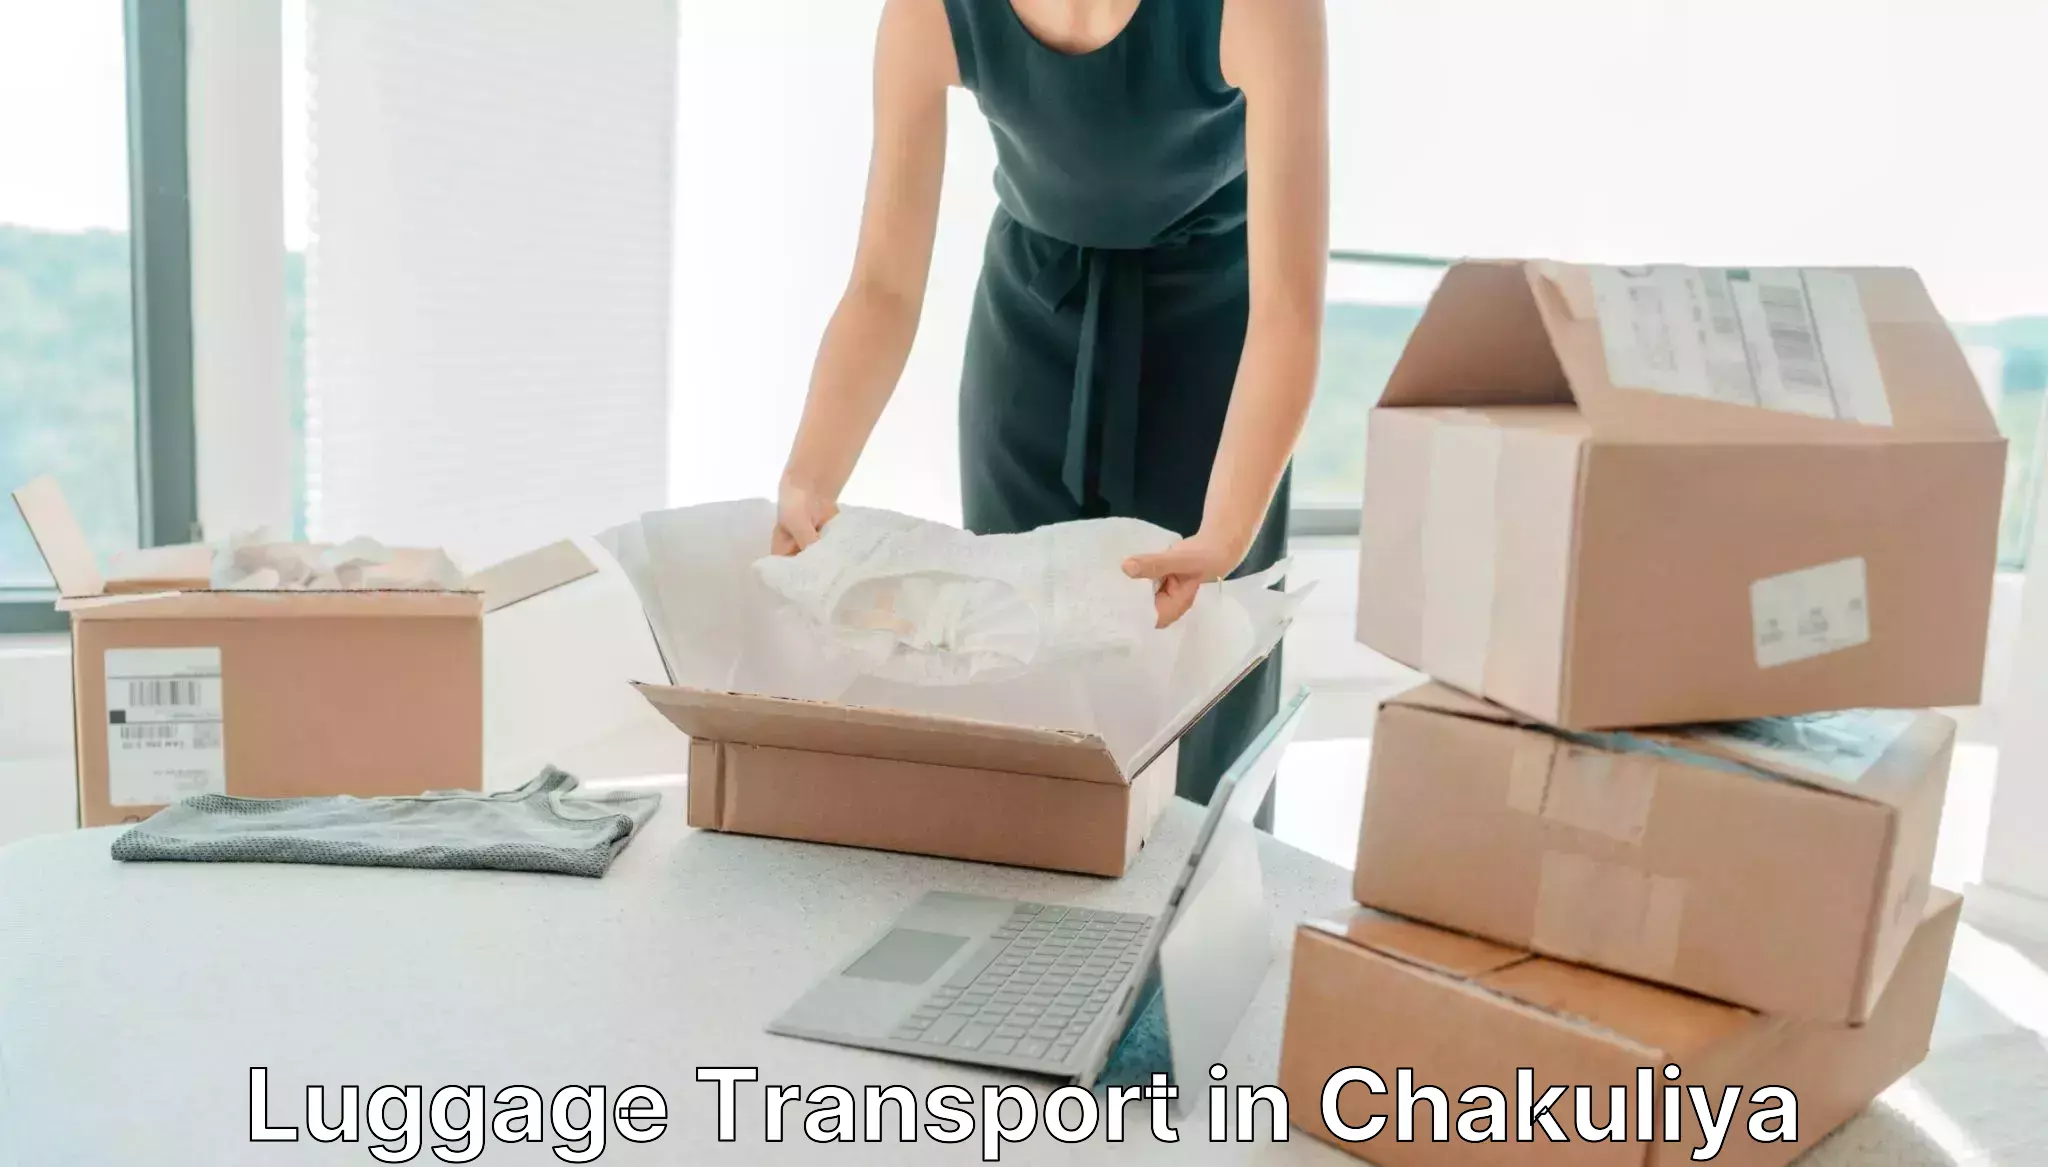 Luggage transfer service in Chakuliya